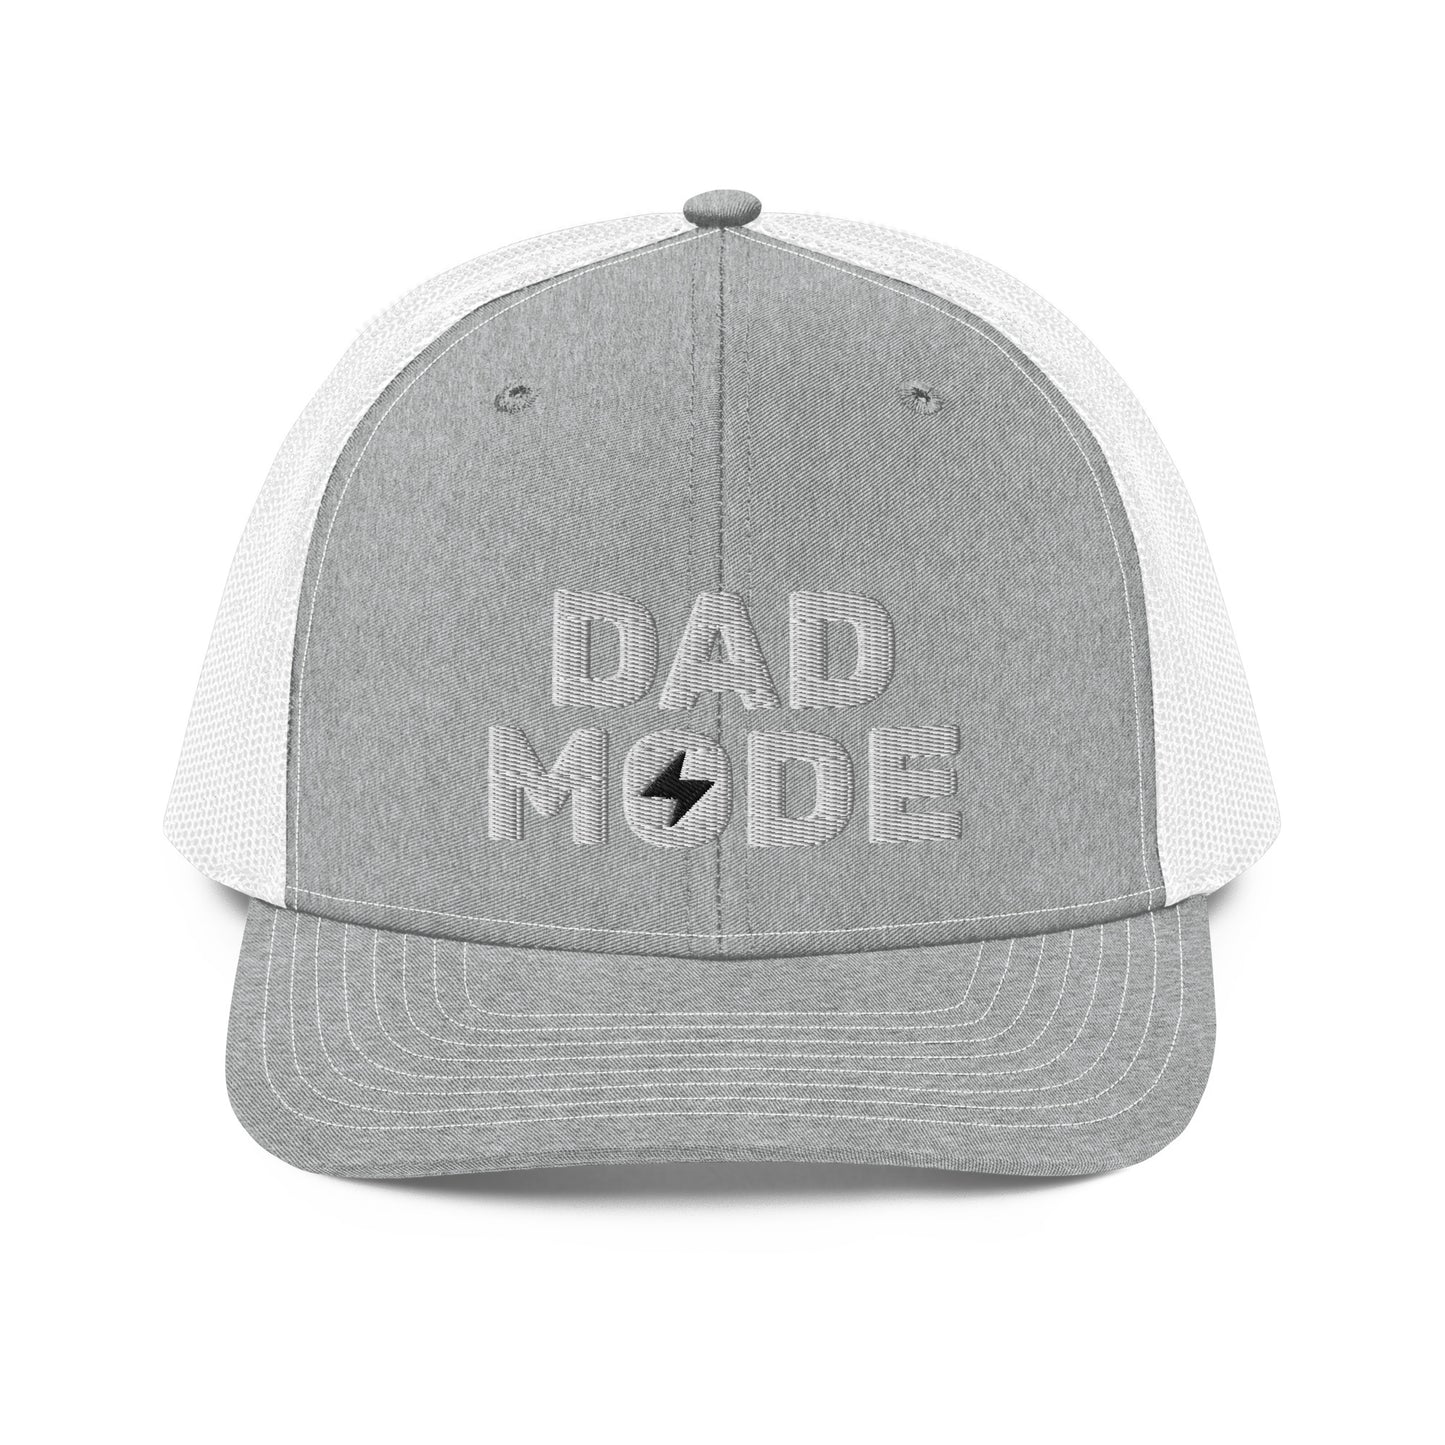 Dad-mode stealth hat